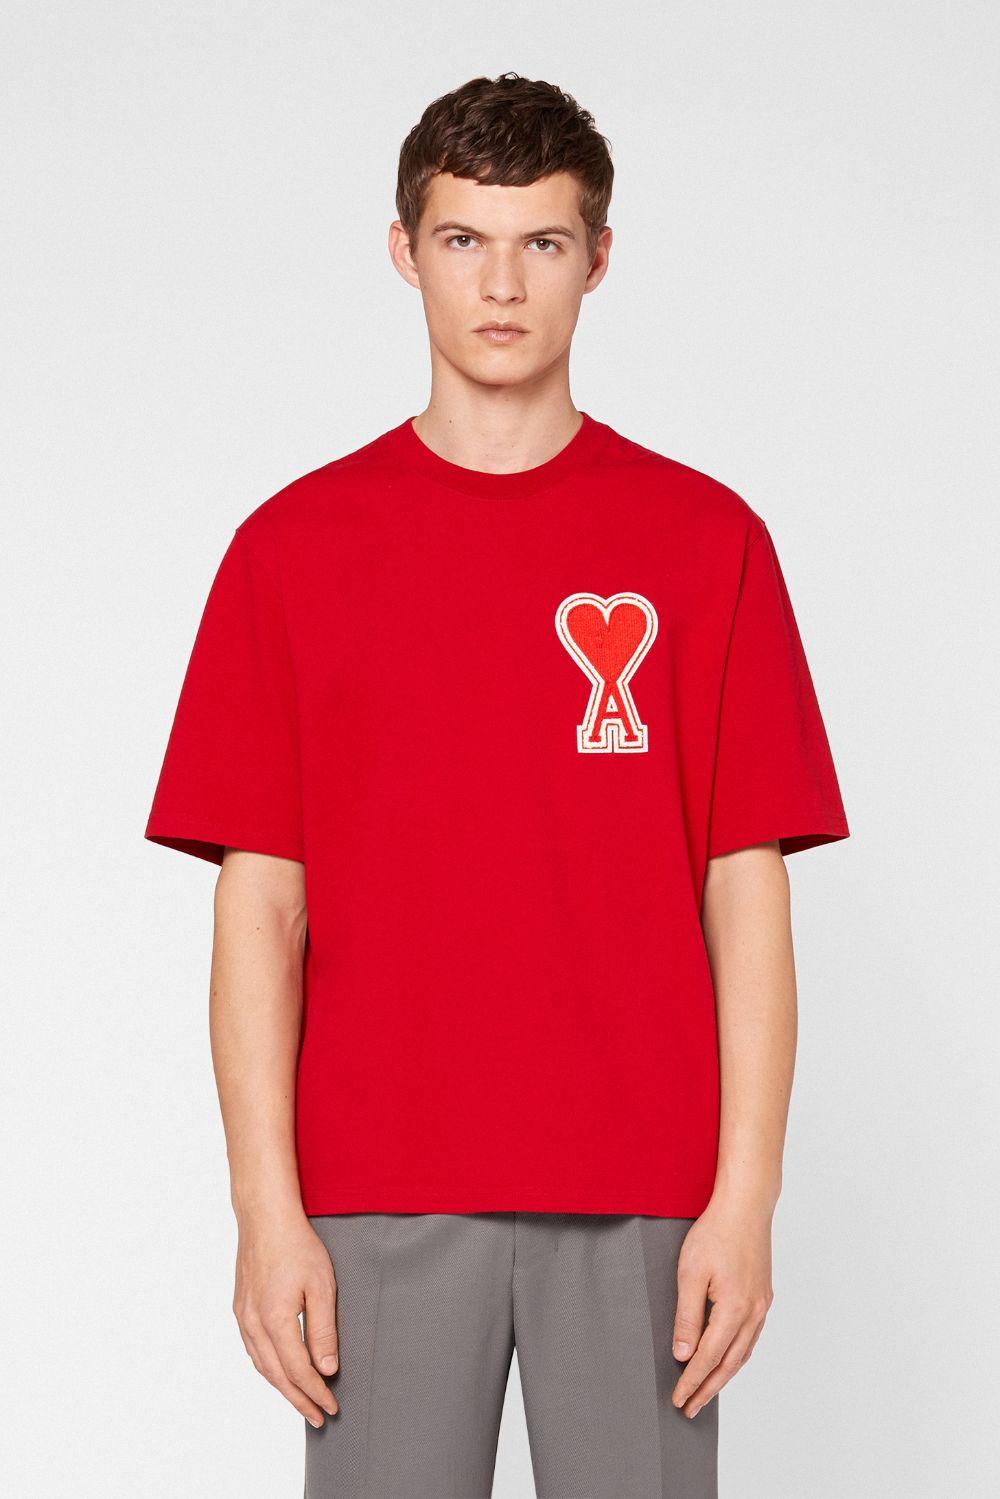 AMI De Coeur T-shirt in Red for Men - Lyst